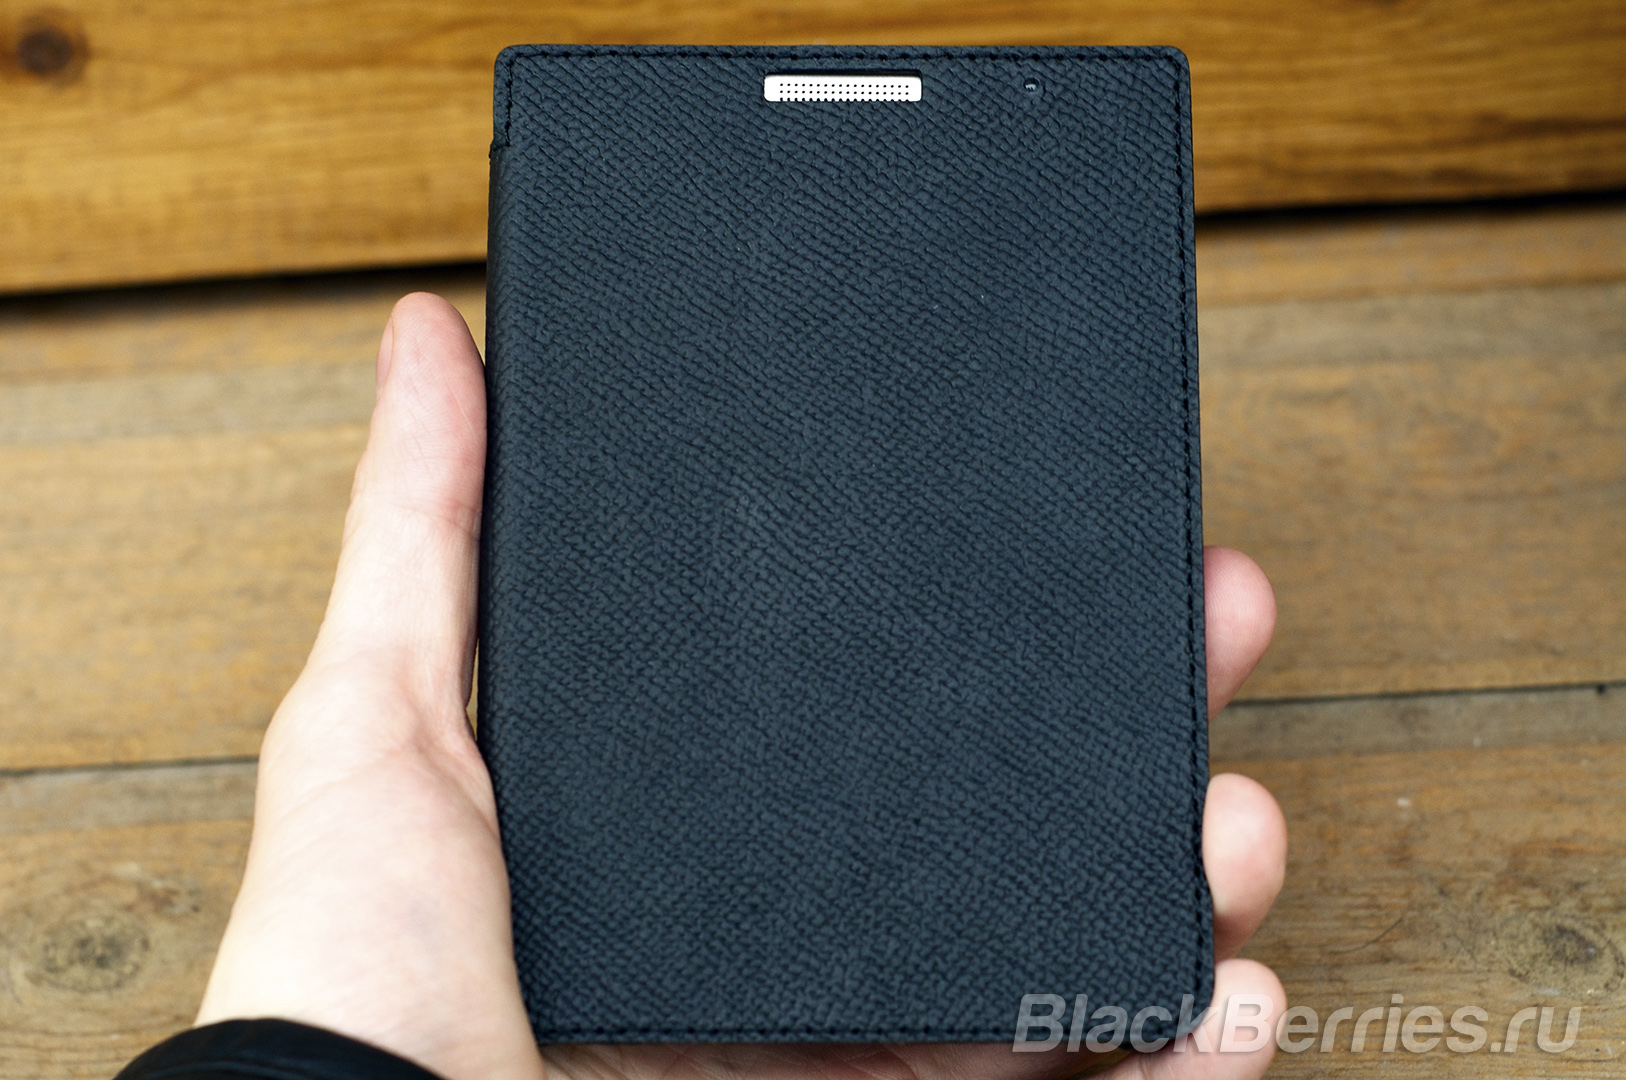 BlackBerry-Passport-Silver-Edition-Cases-15